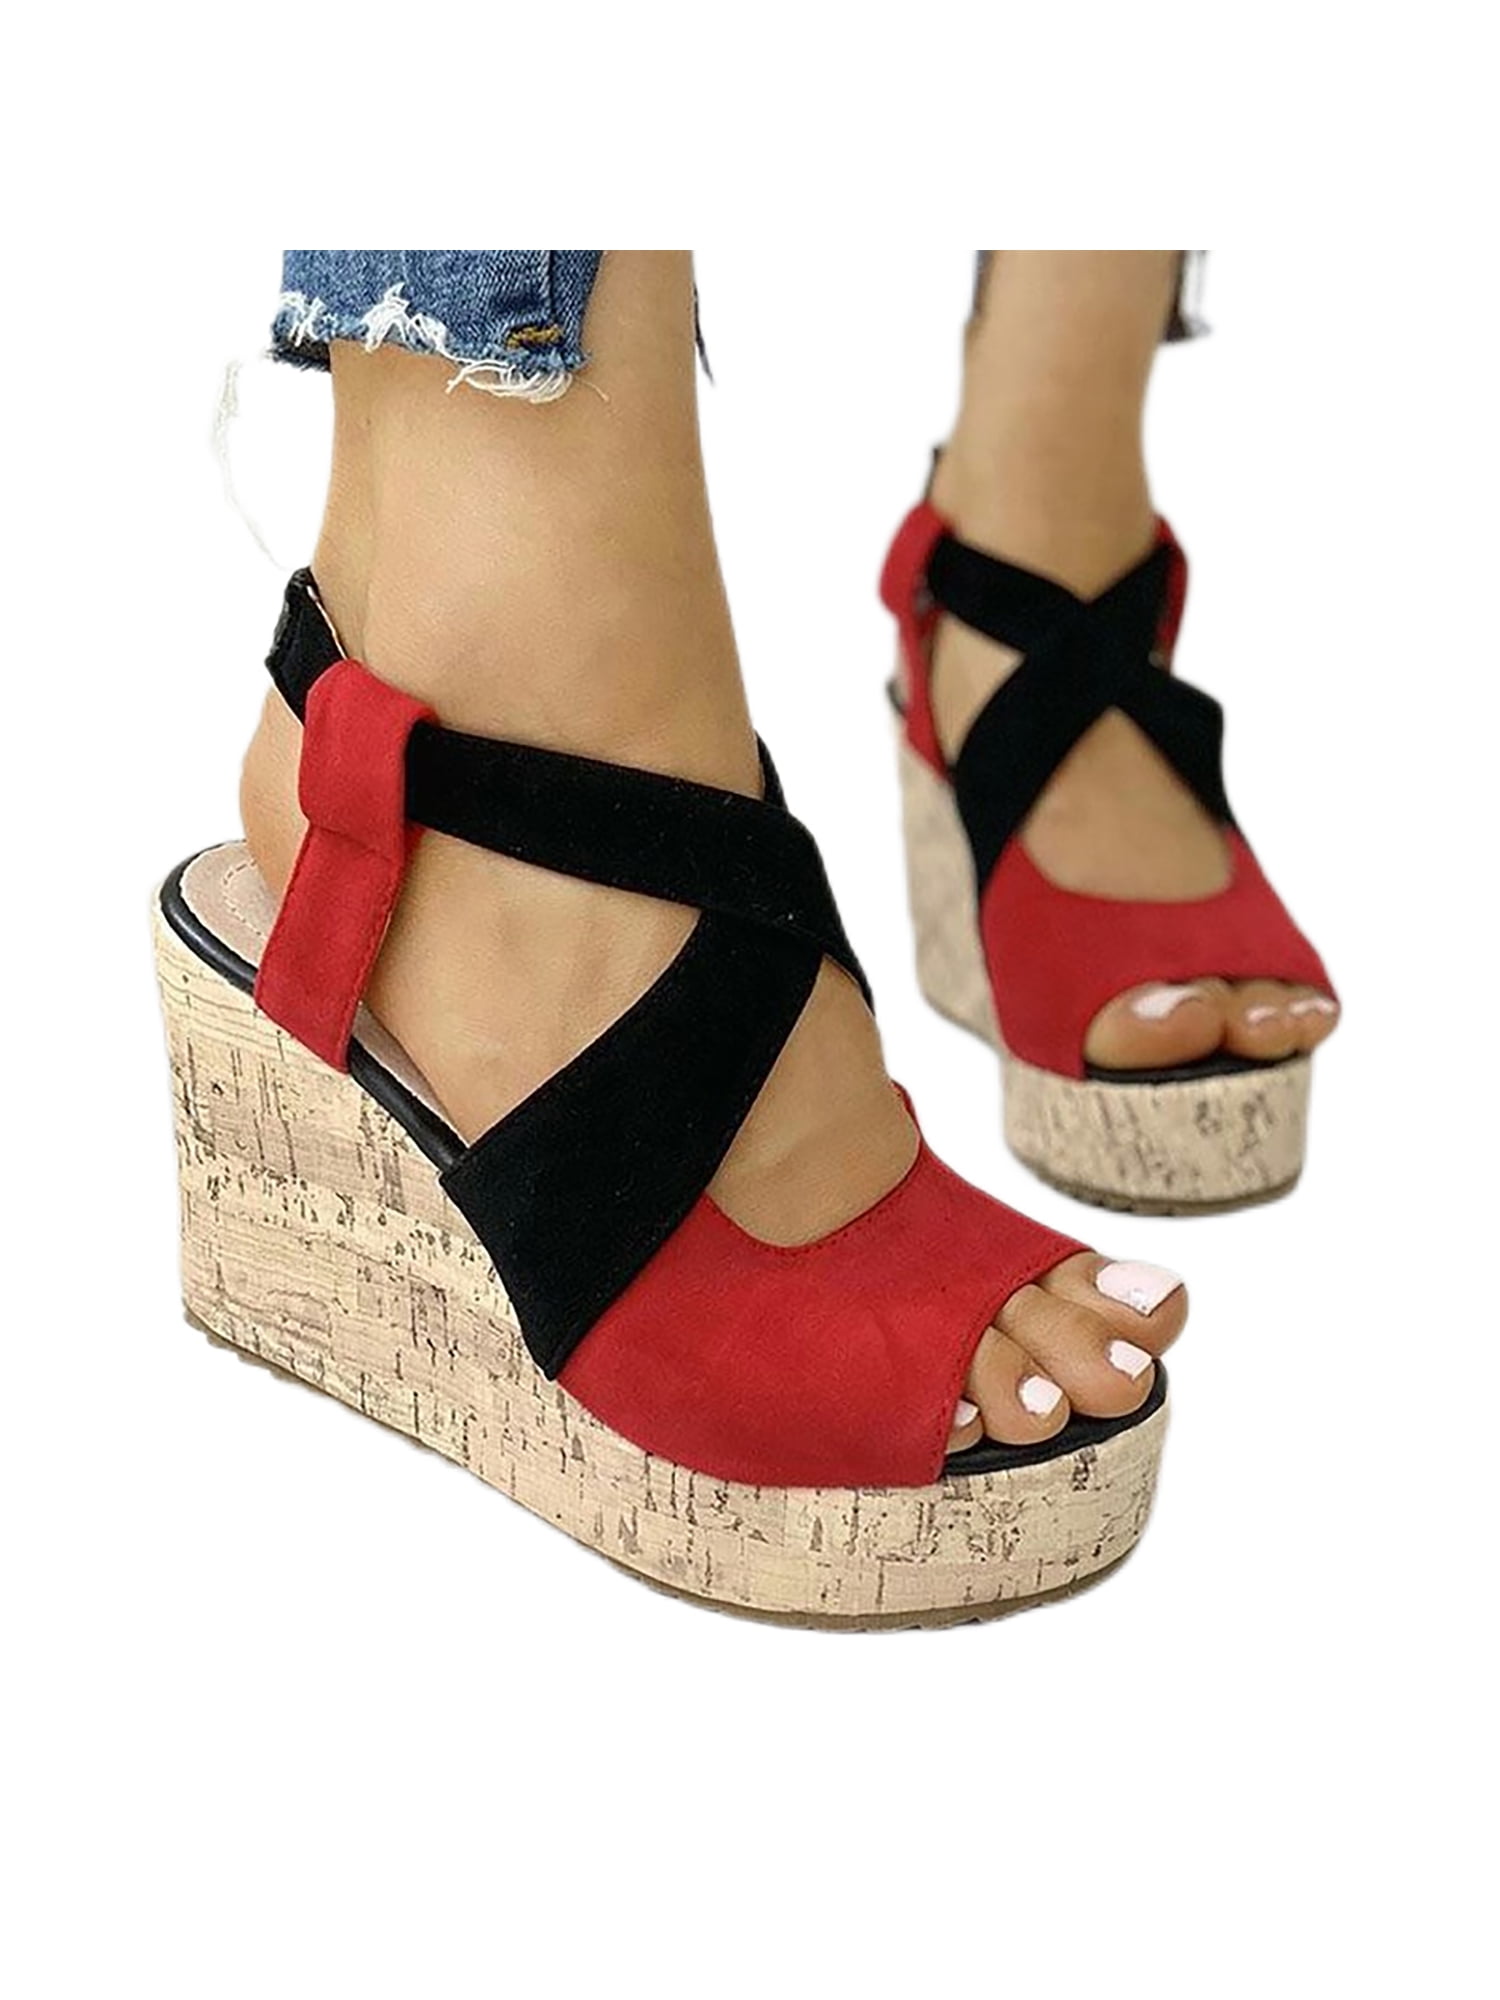 Comfort Sandals for Women,SUGEER Women Summer Pumps Platform Sandals Roman Wedges Casual Peep Toe Platform Wedge Sandals 